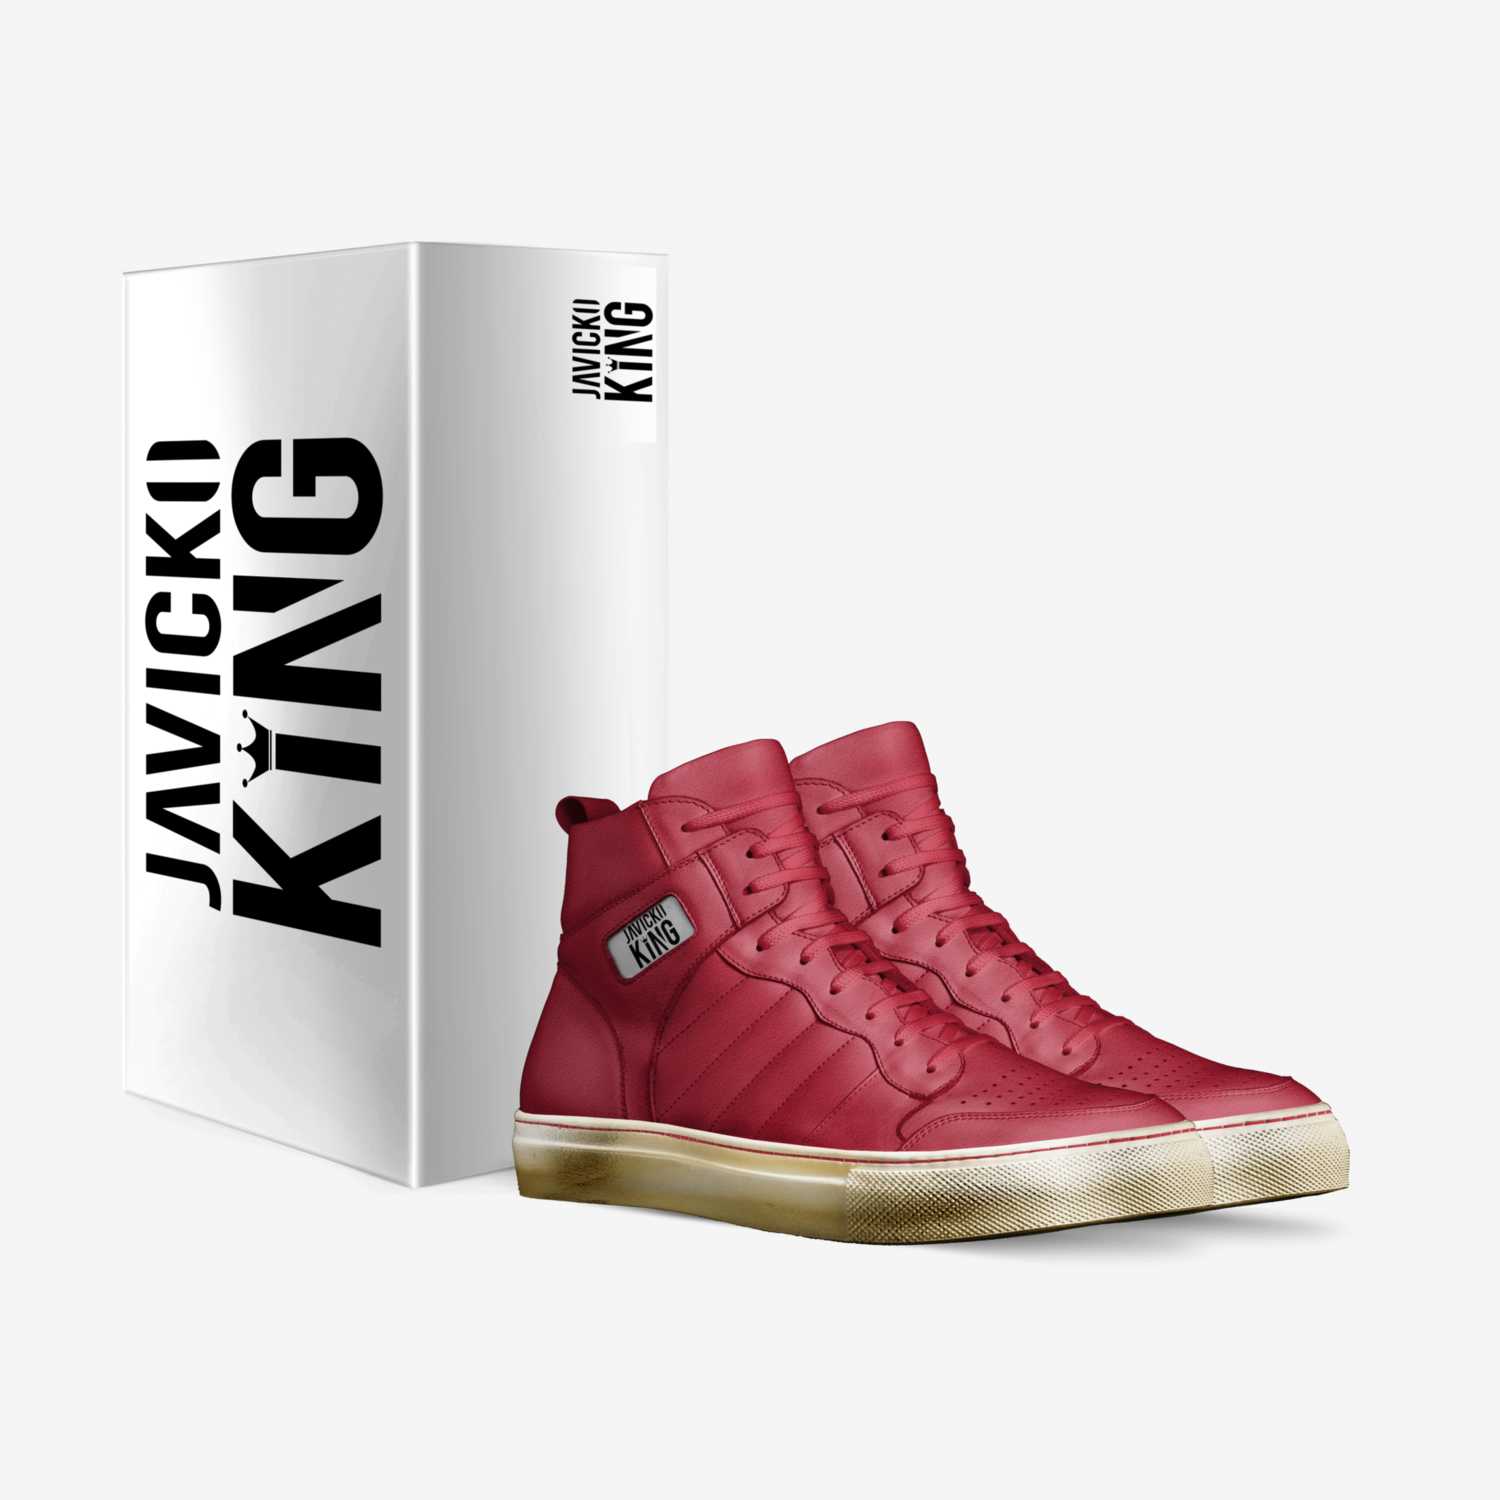 Javicko King custom made in Italy shoes by Javier Espinoza | Box view